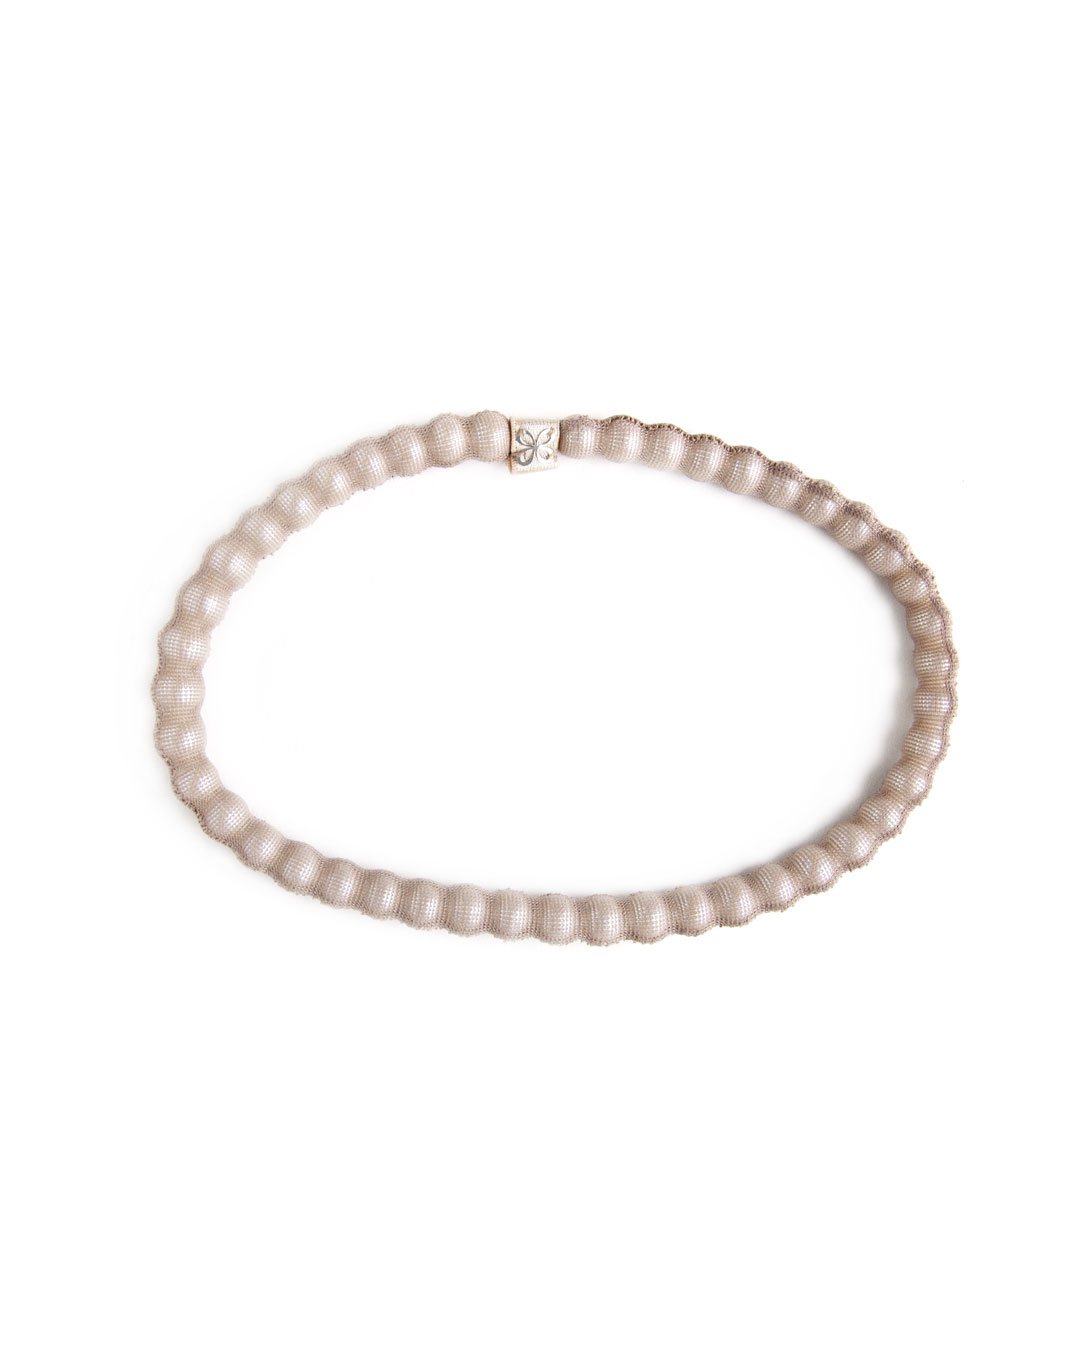 Carmen Hauser, Pearls in Nylon S, 2007, necklace; nylon, freshwater pearls, ø 140 mm x 10 mm, €590